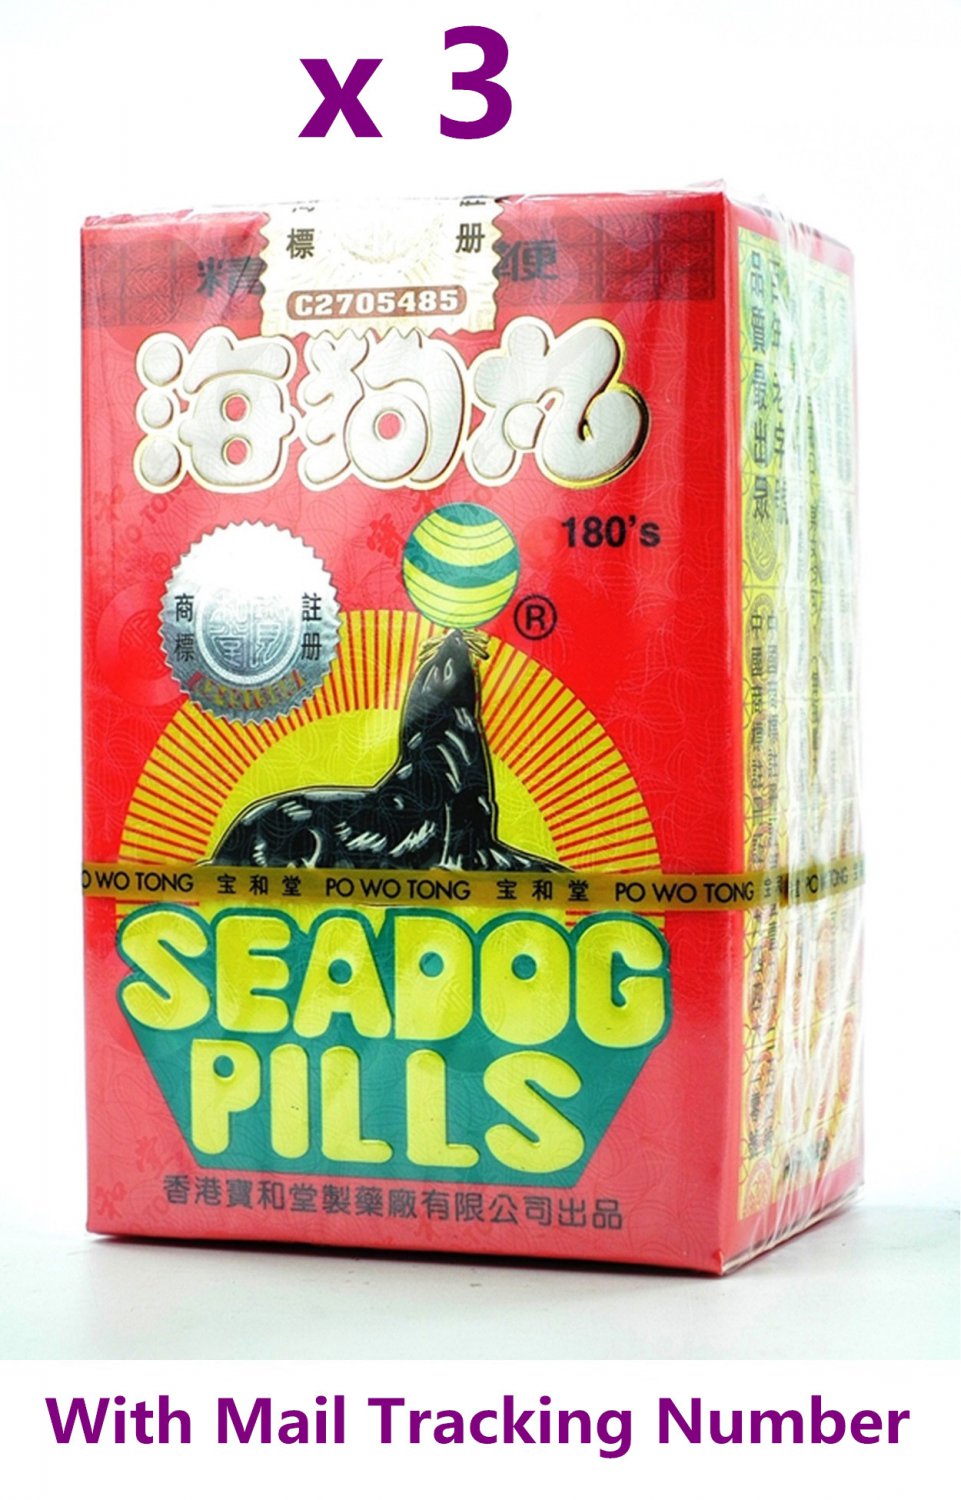 Po Wo Tong Seal Inhabit Sea dog Pills Male seadog Tonic 180 Capsules x 3 Boxes